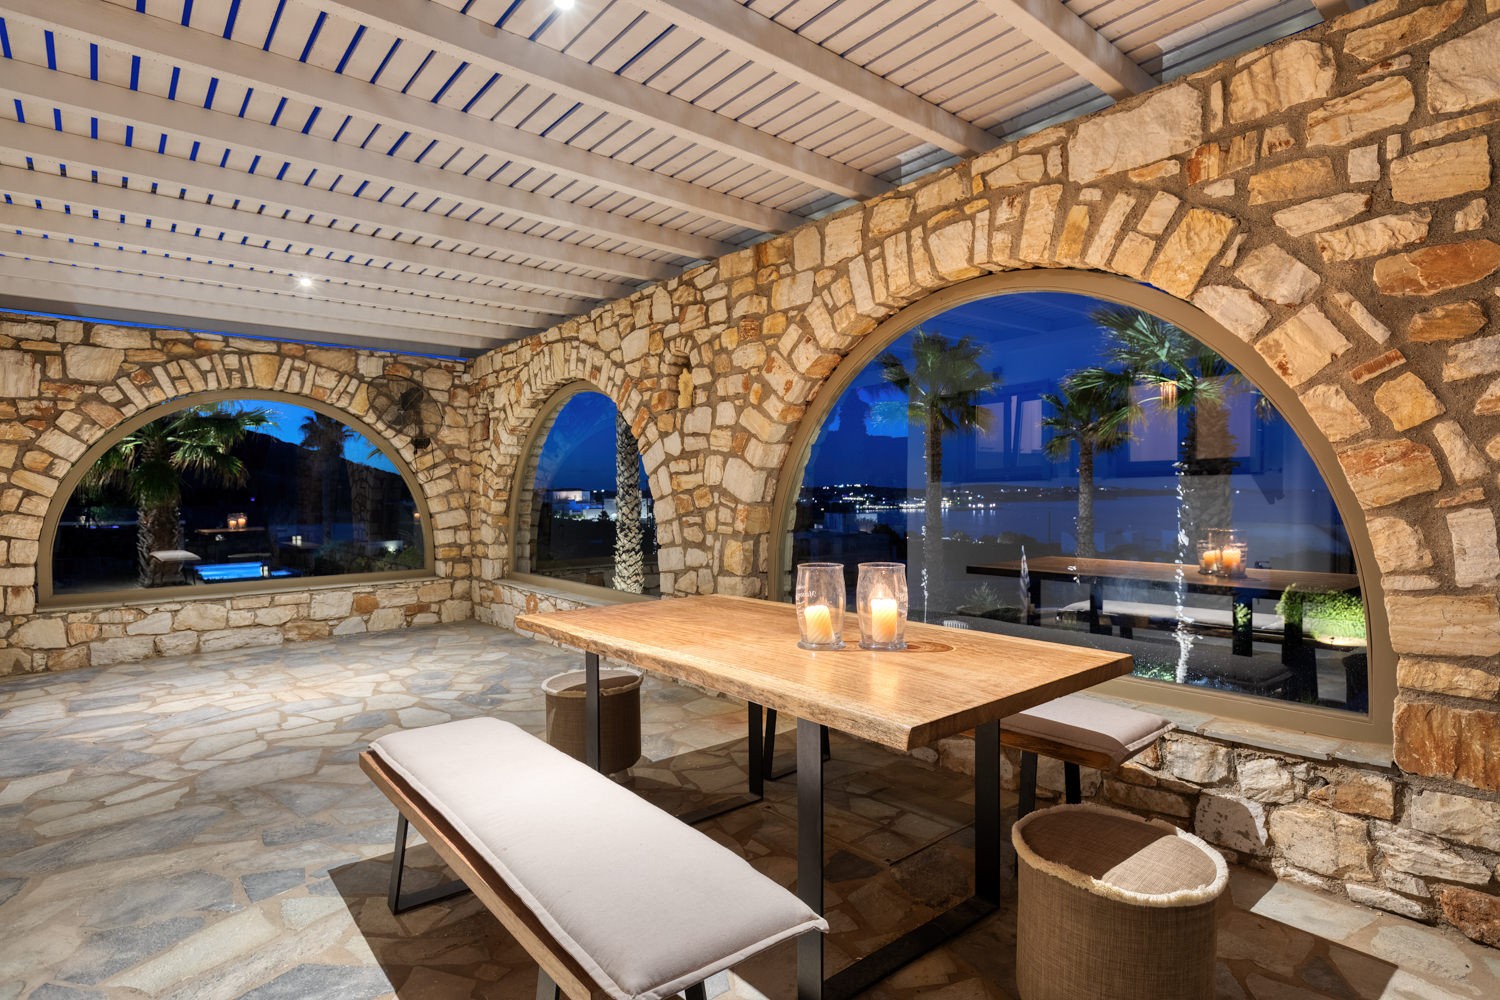 Amalgam Homes Avra villa, Paros island: image interior gallery